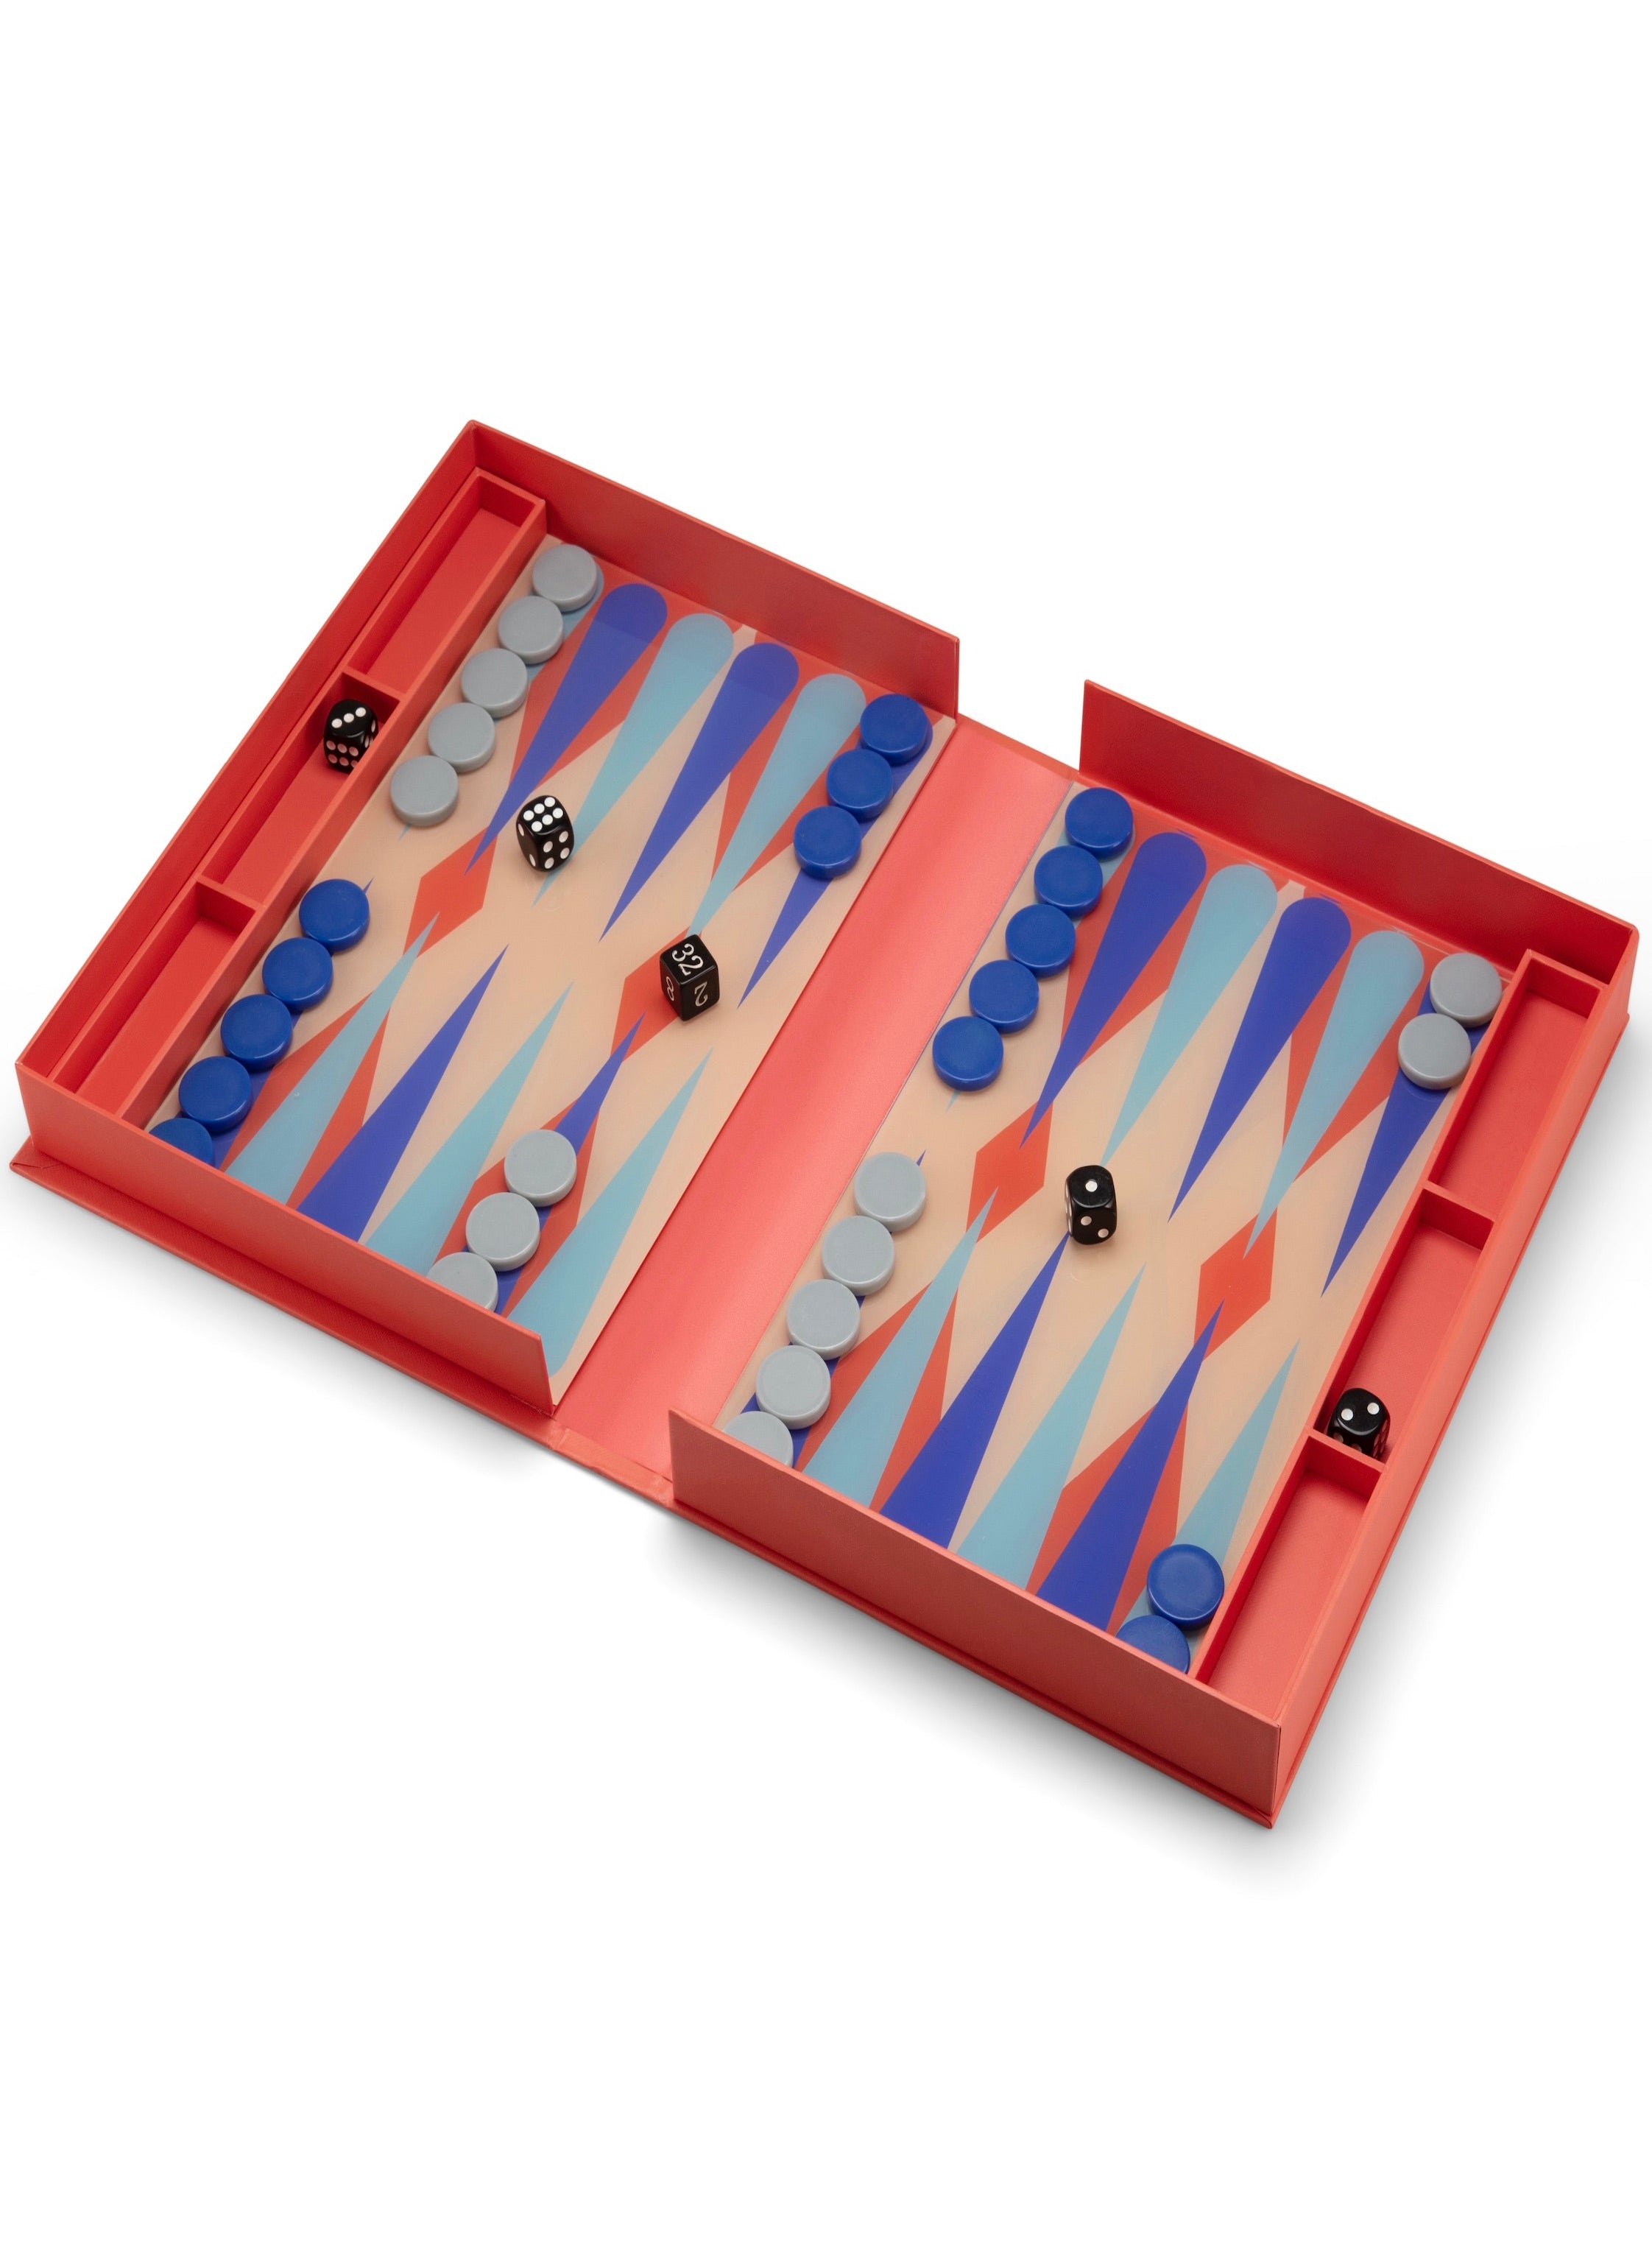 PRINTWORKS The Art of Backgammon